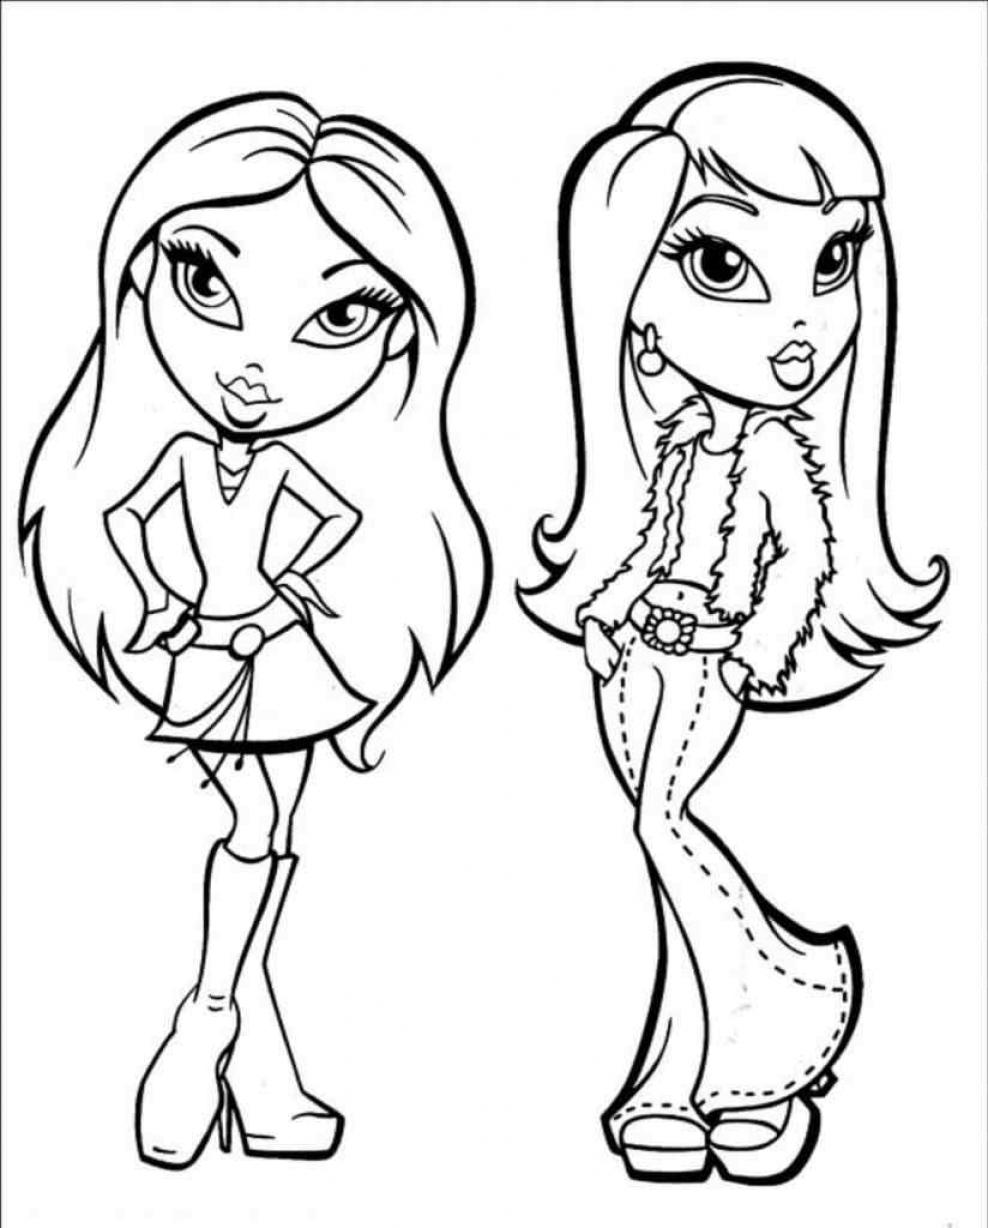 Fashionable And Friendly Bratz Dolls Coloring Pages - SheetalColor.com